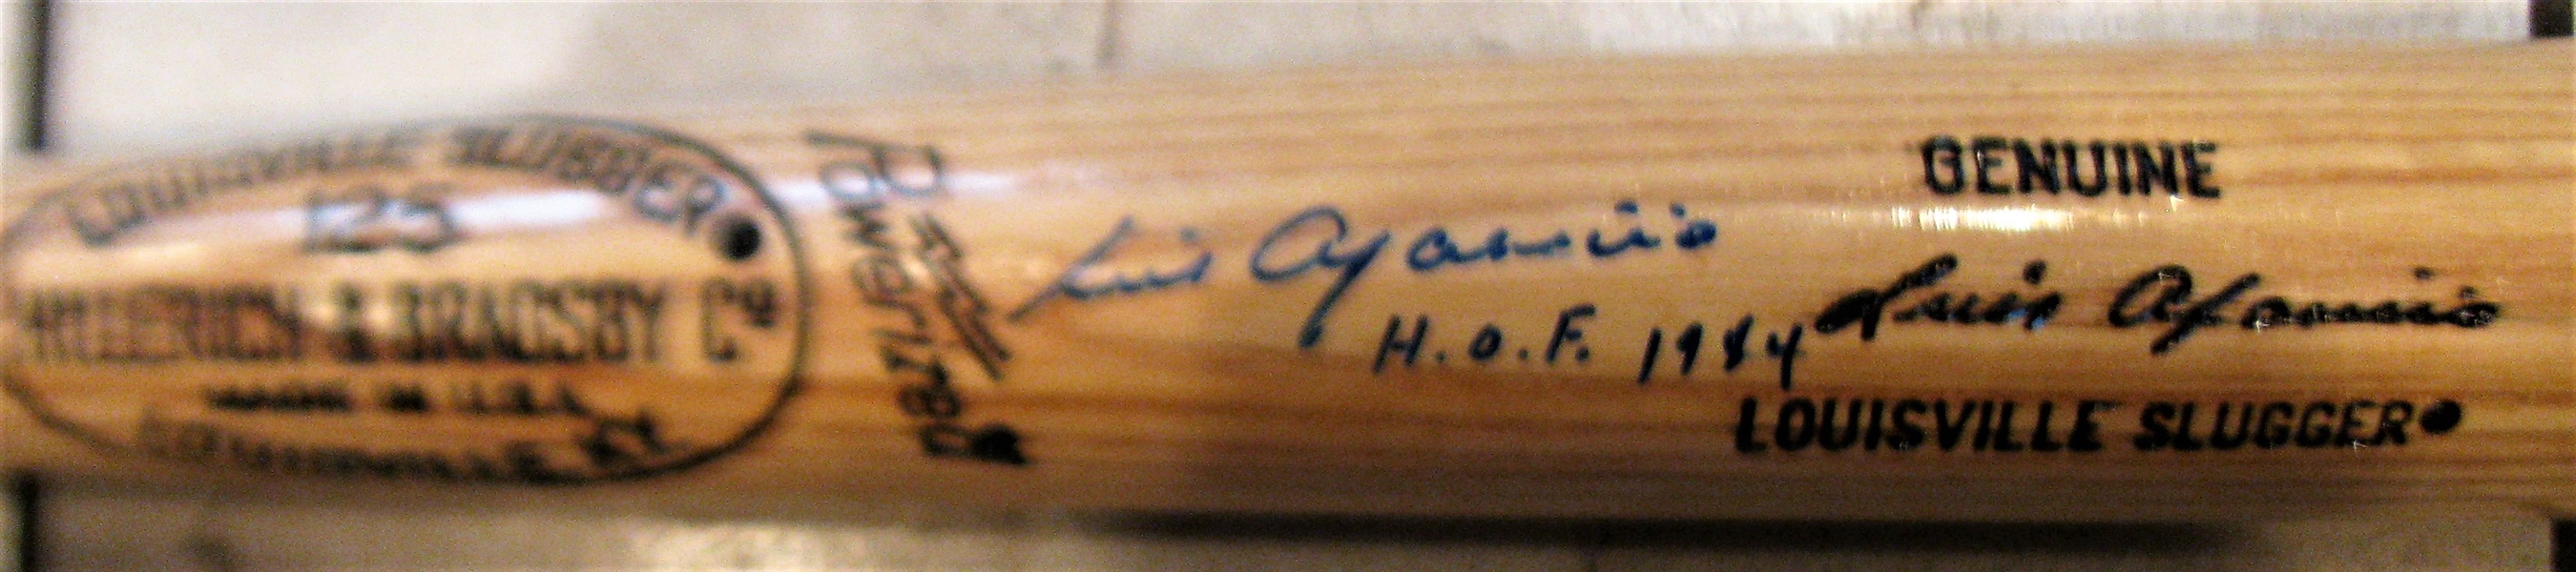 LUIS APARICIO HOF 1984 SIGNED BASEBALL BAT W/CAS